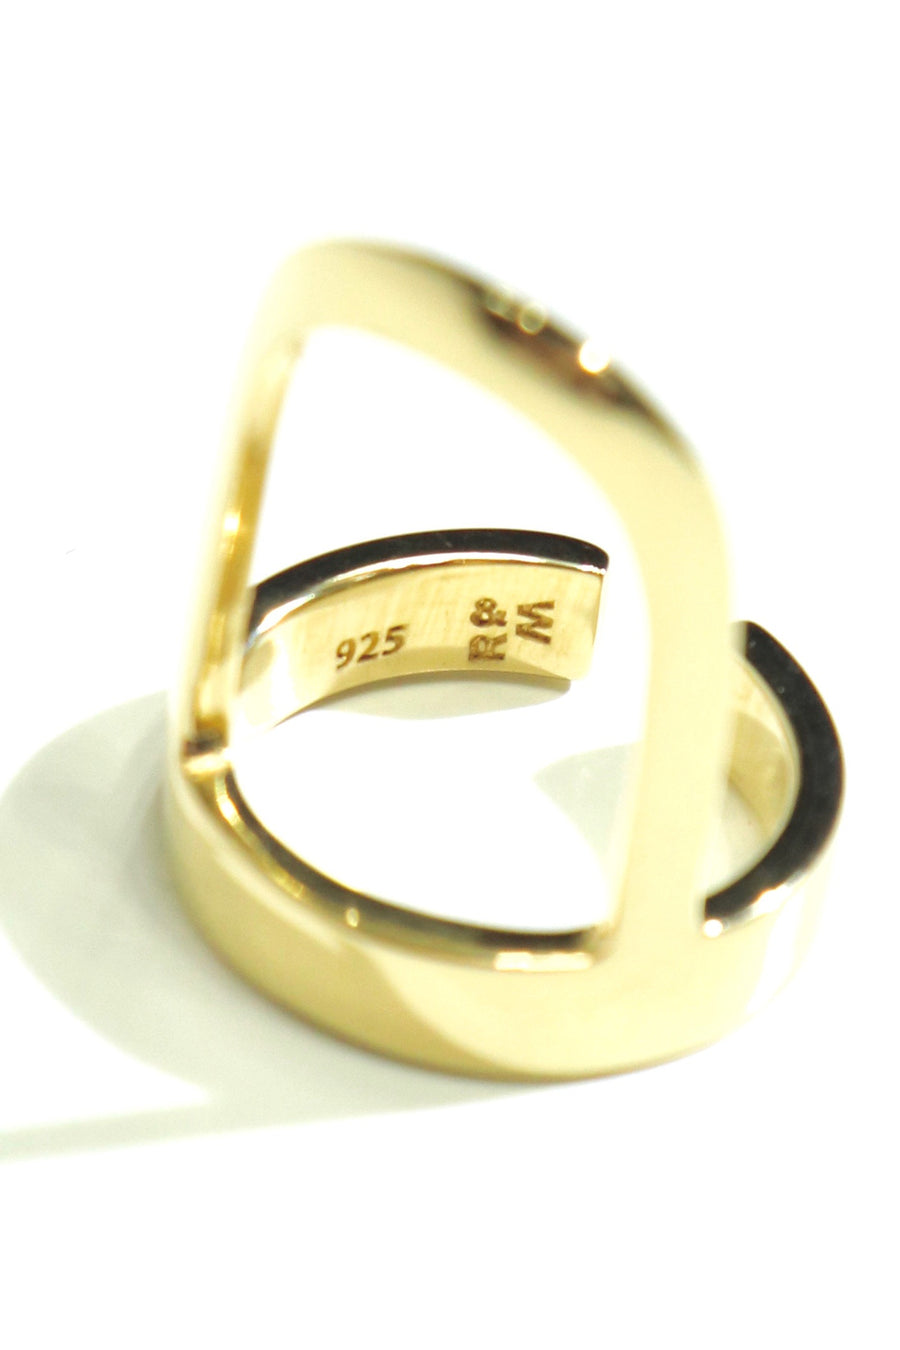 RATHEL & WOLF  SIMONE ring (GOLD)